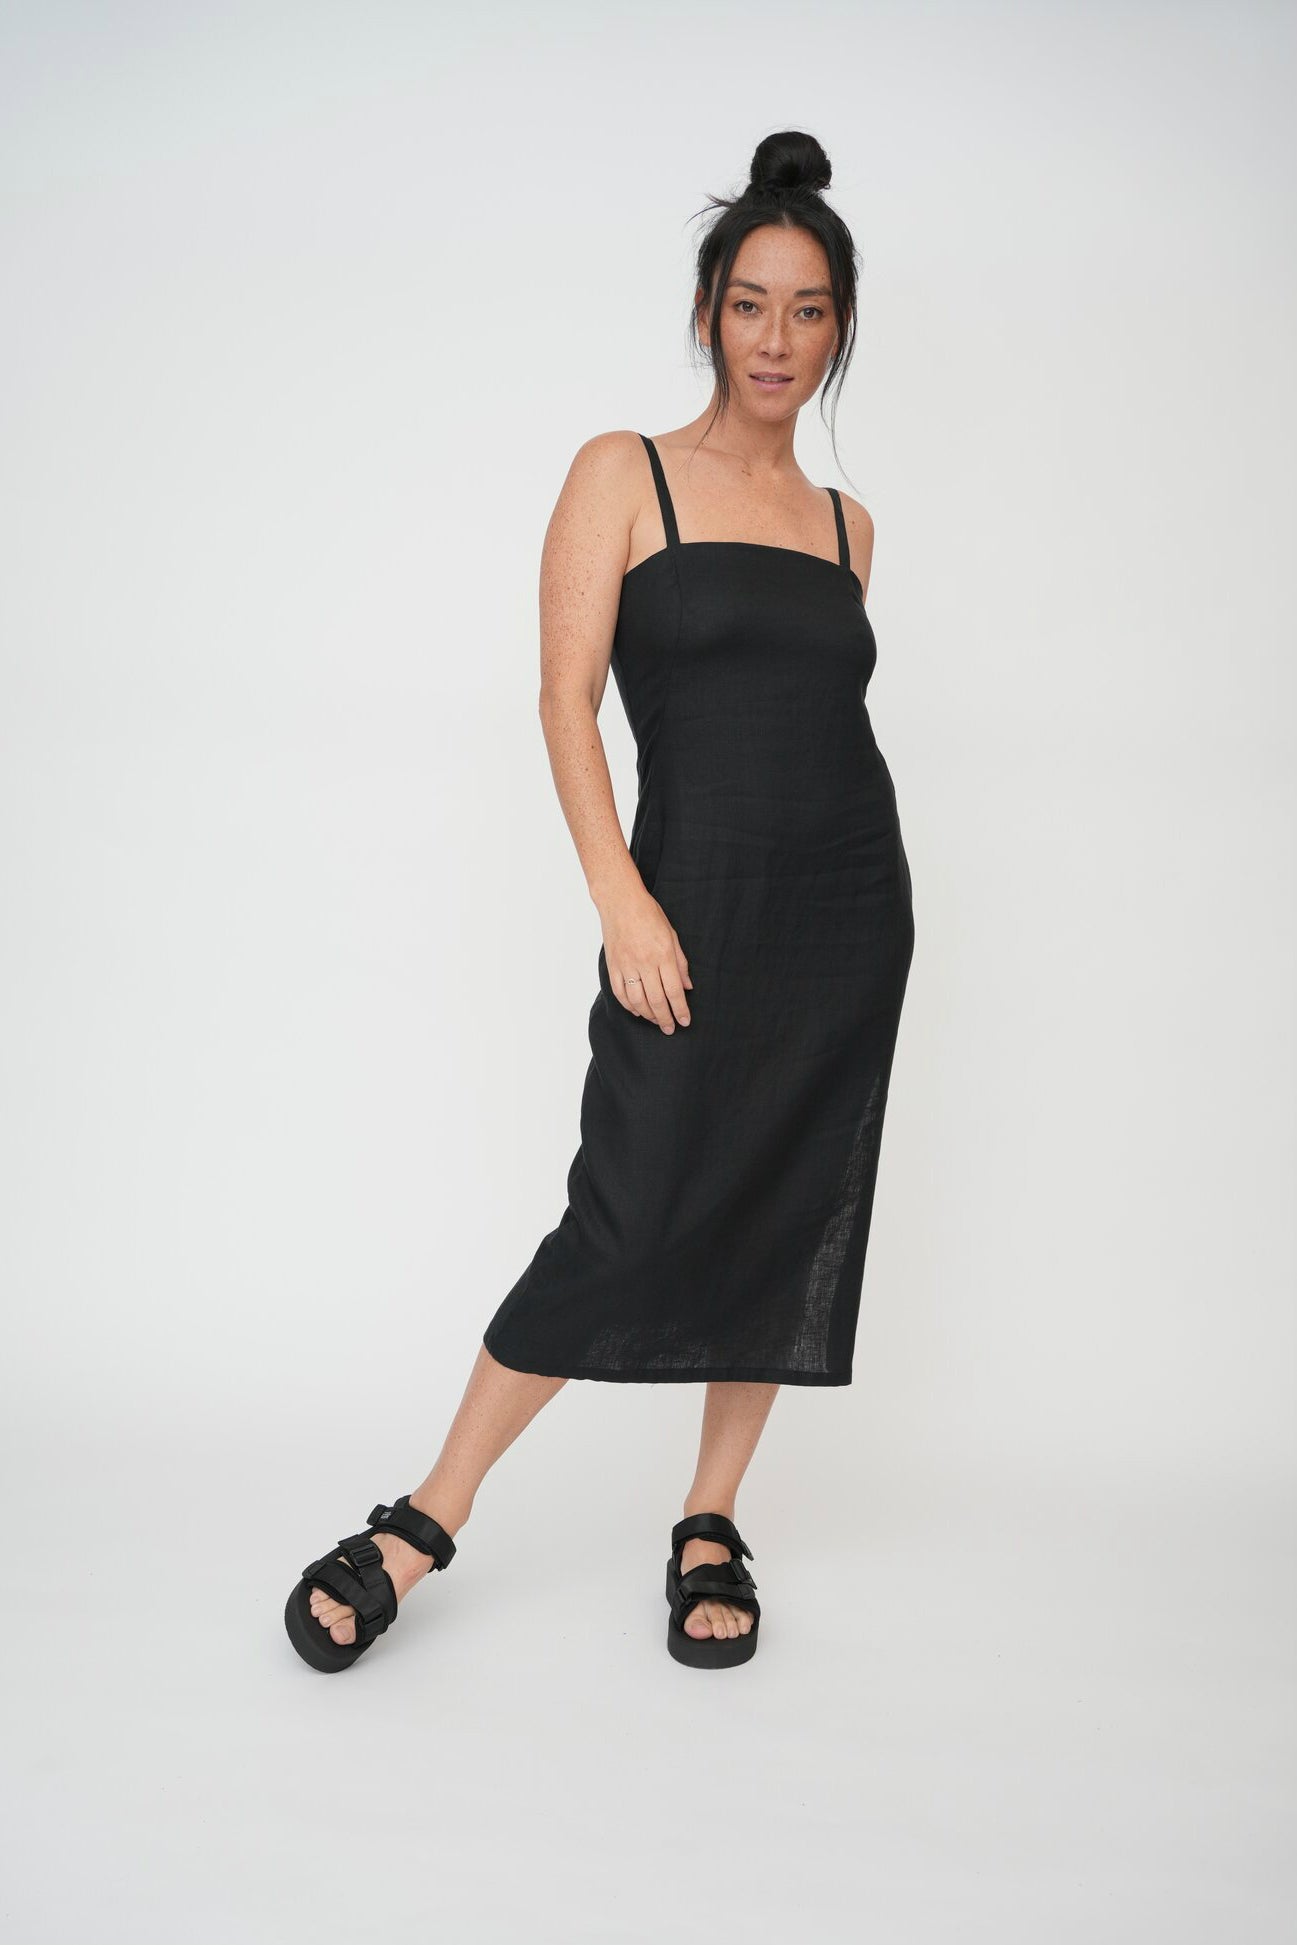 Black dress with side splits 